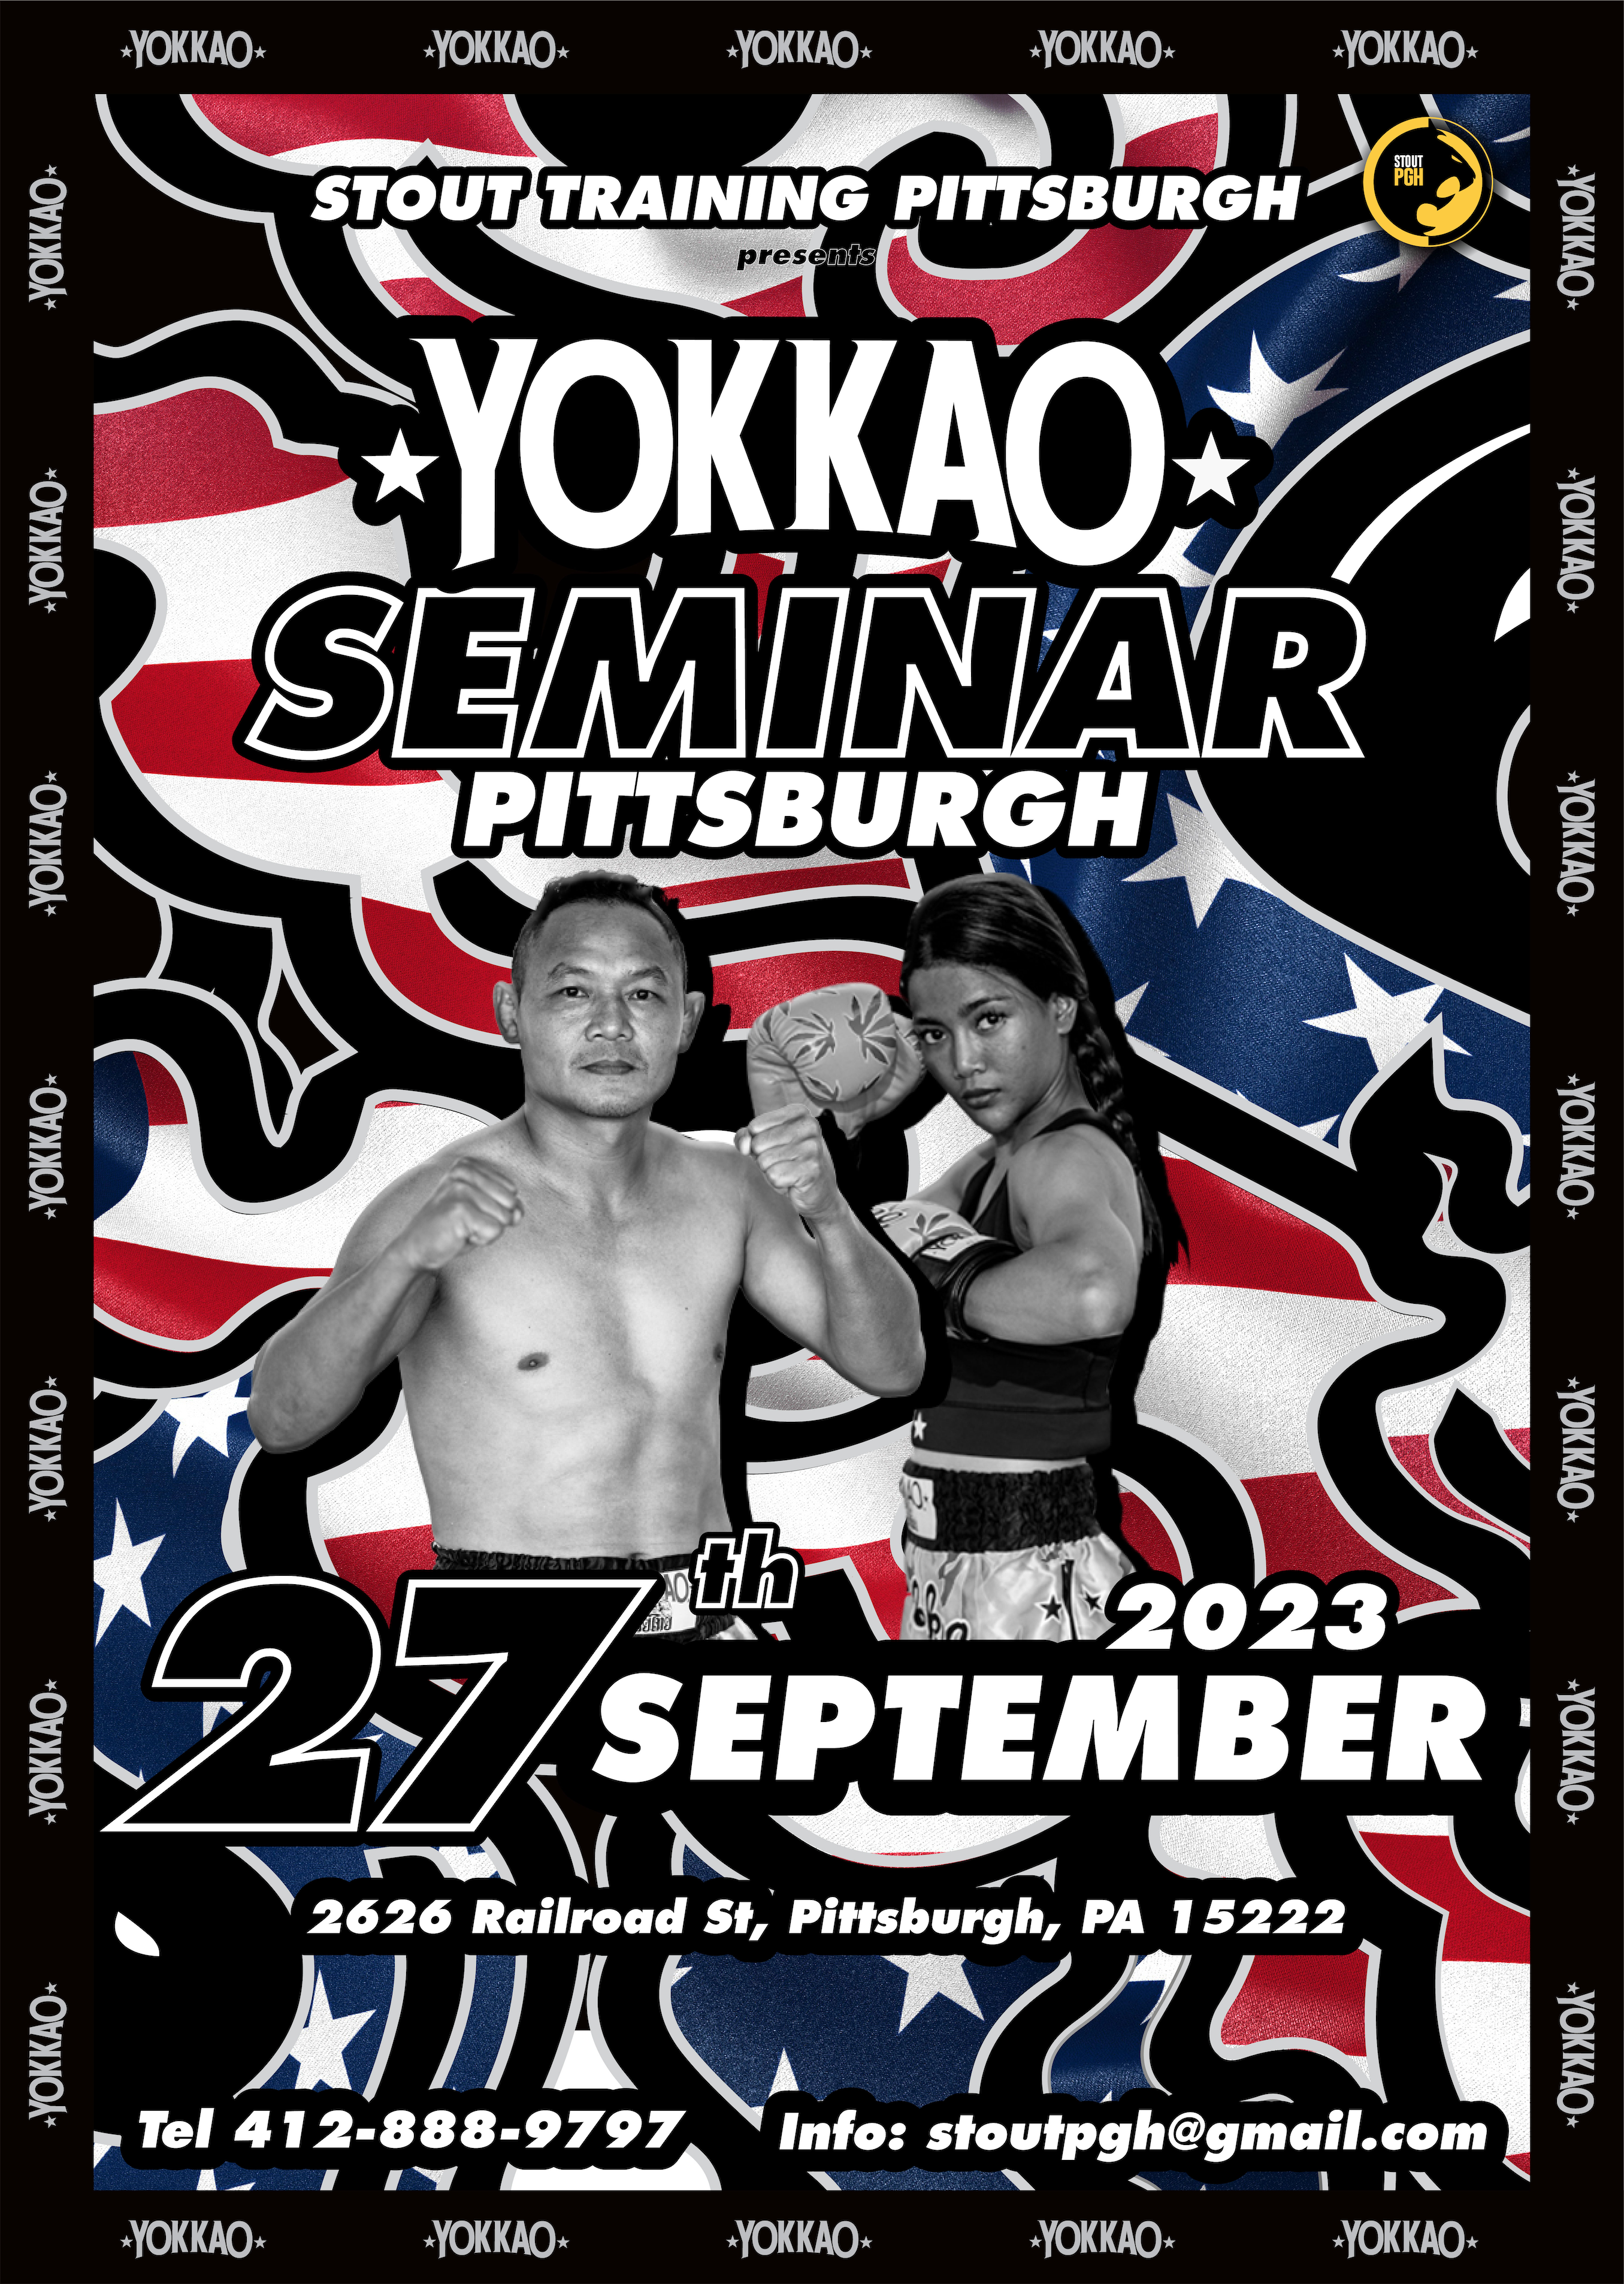 Yokkao Returns to Stout PGH for World Class Seminar